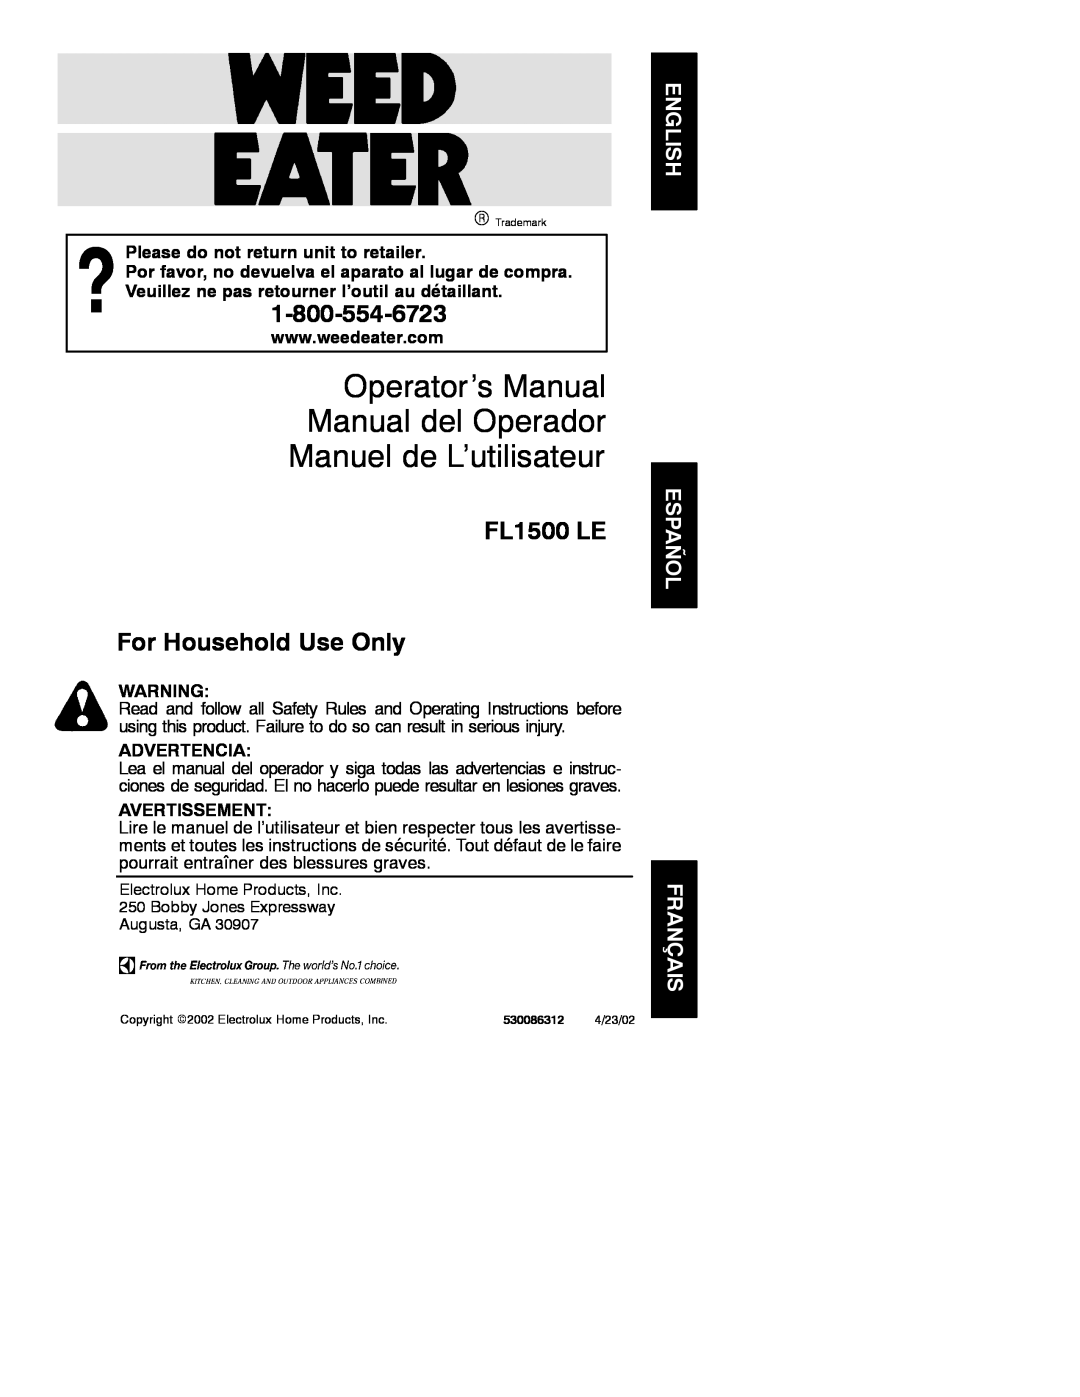 Weed Eater 530086312 manual Operator’s Manual Manual del Operador Manuel de L’utilisateur, Advertencia, Avertissement 